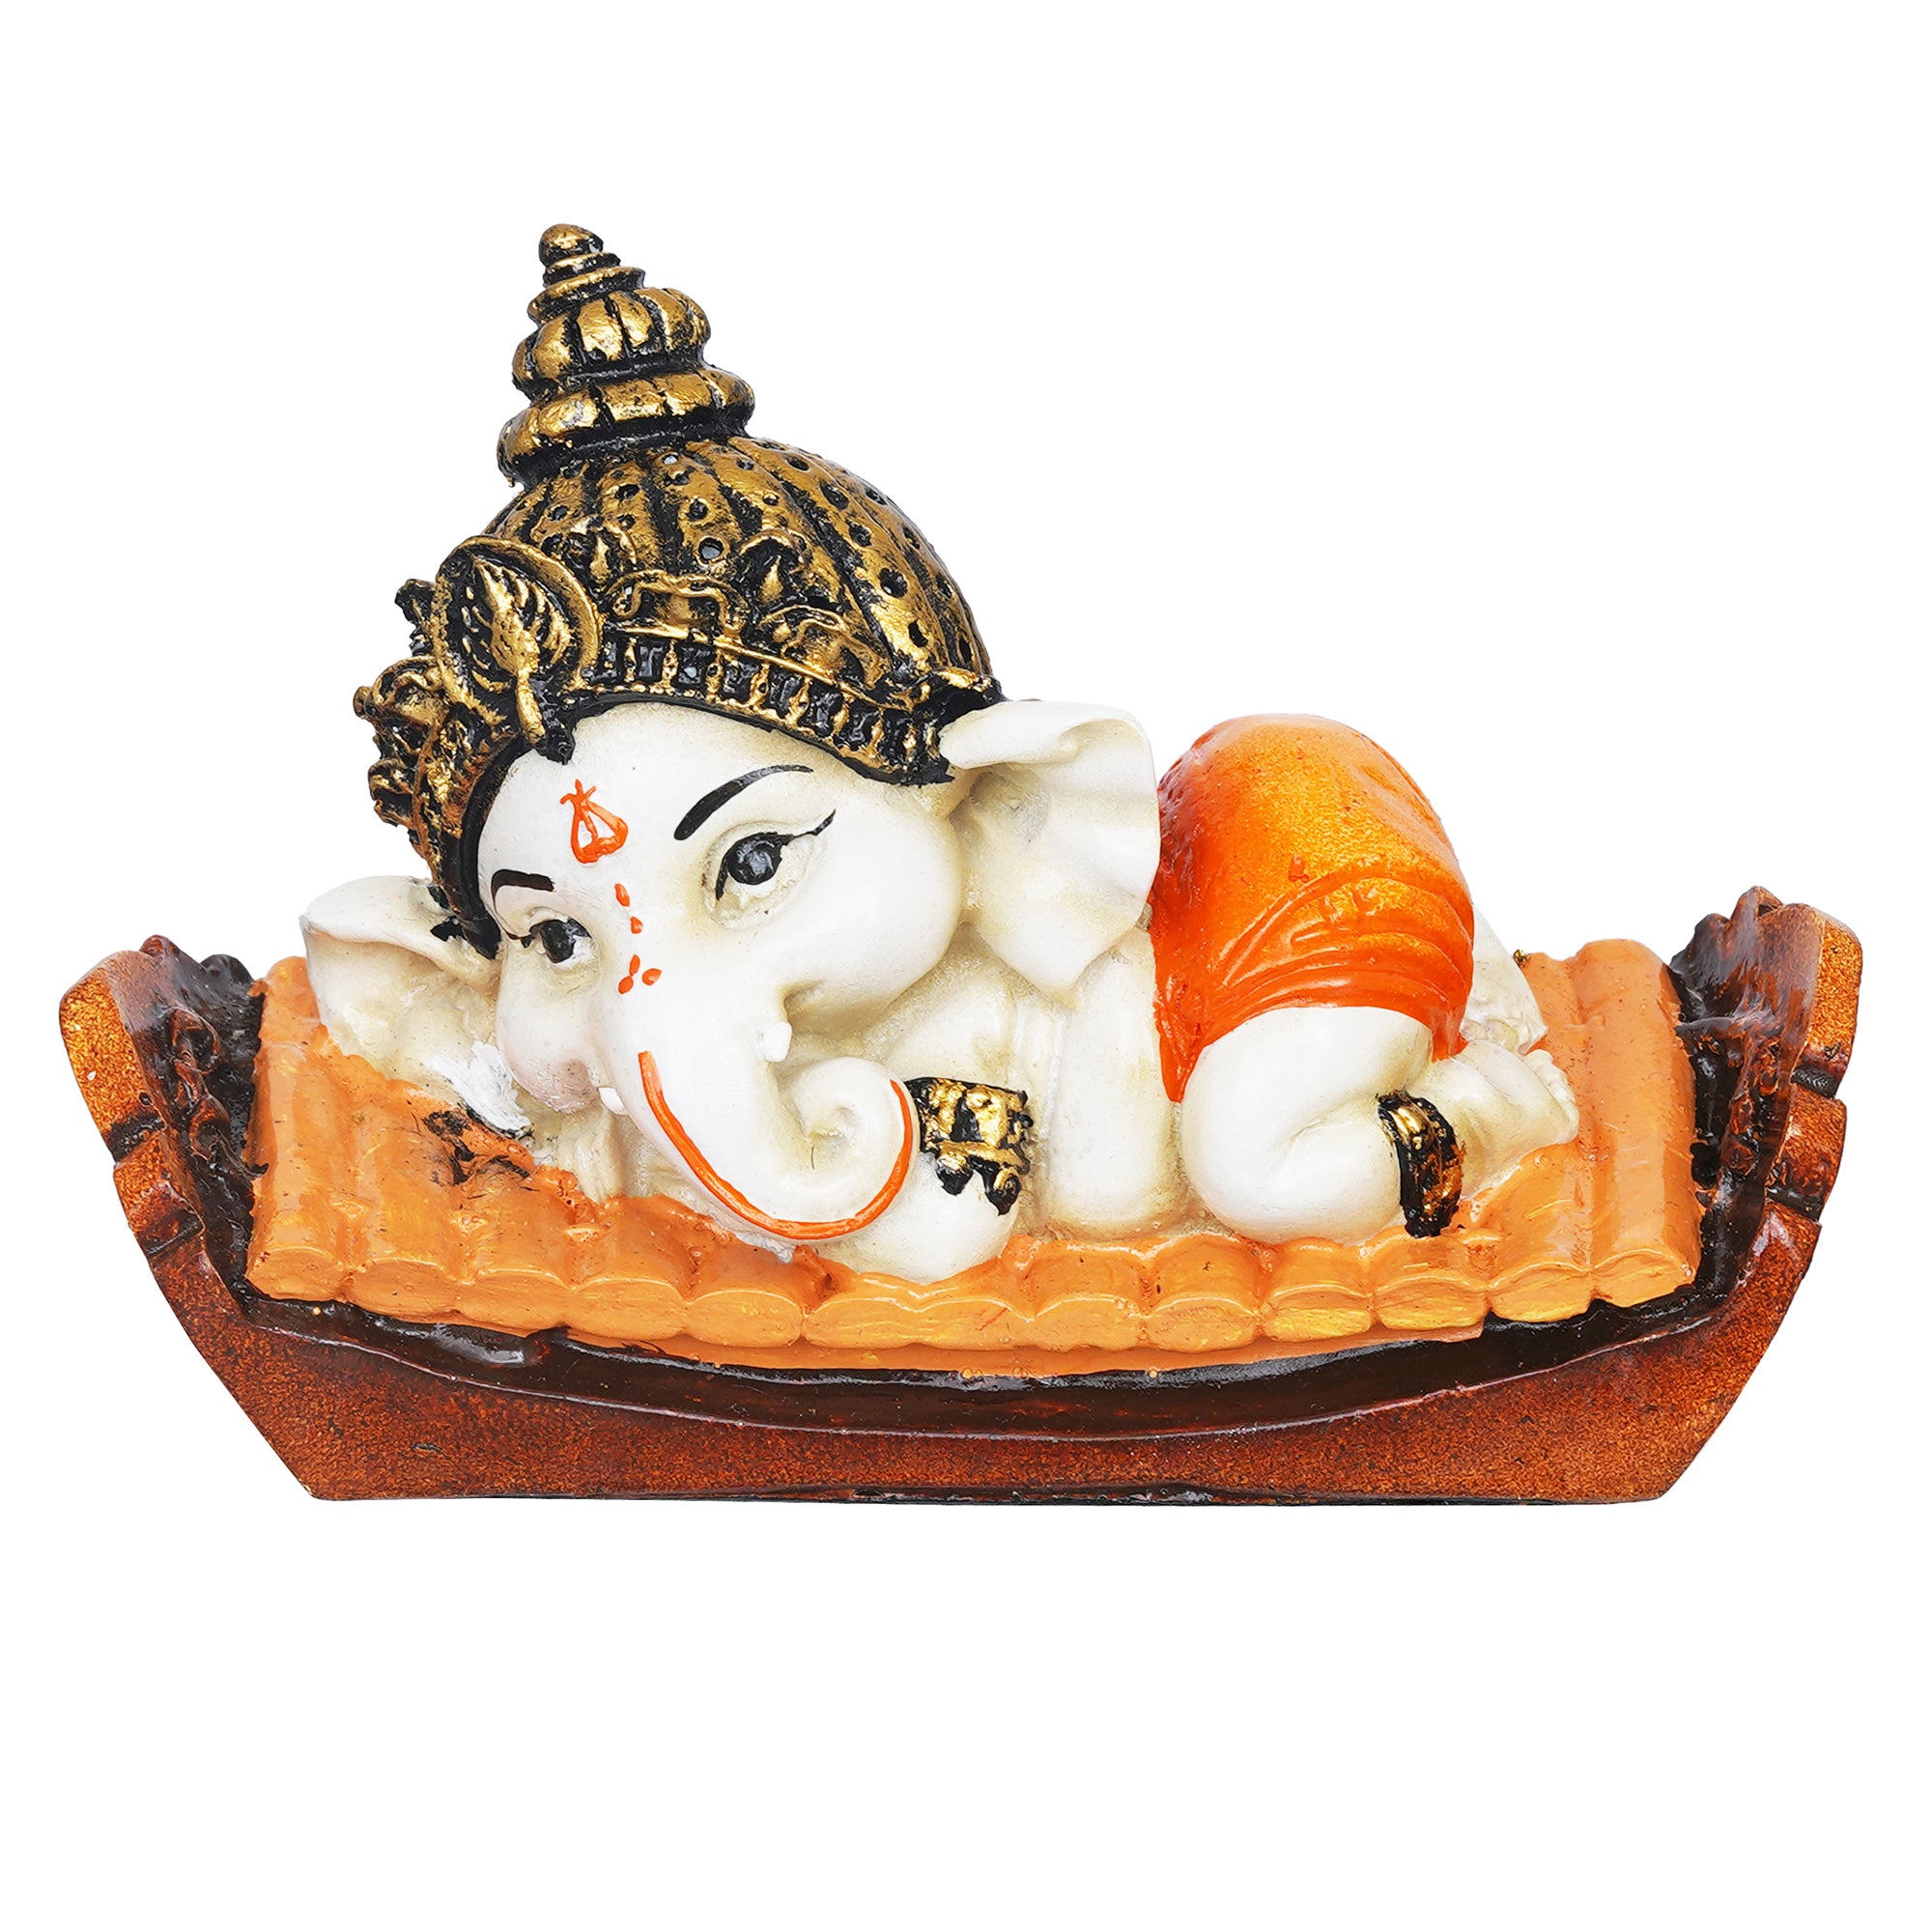 eCraftIndia Orange Handcrafted Polyresin Decorated Lord Ganesha Idol Sitting on Musical Instrument 2